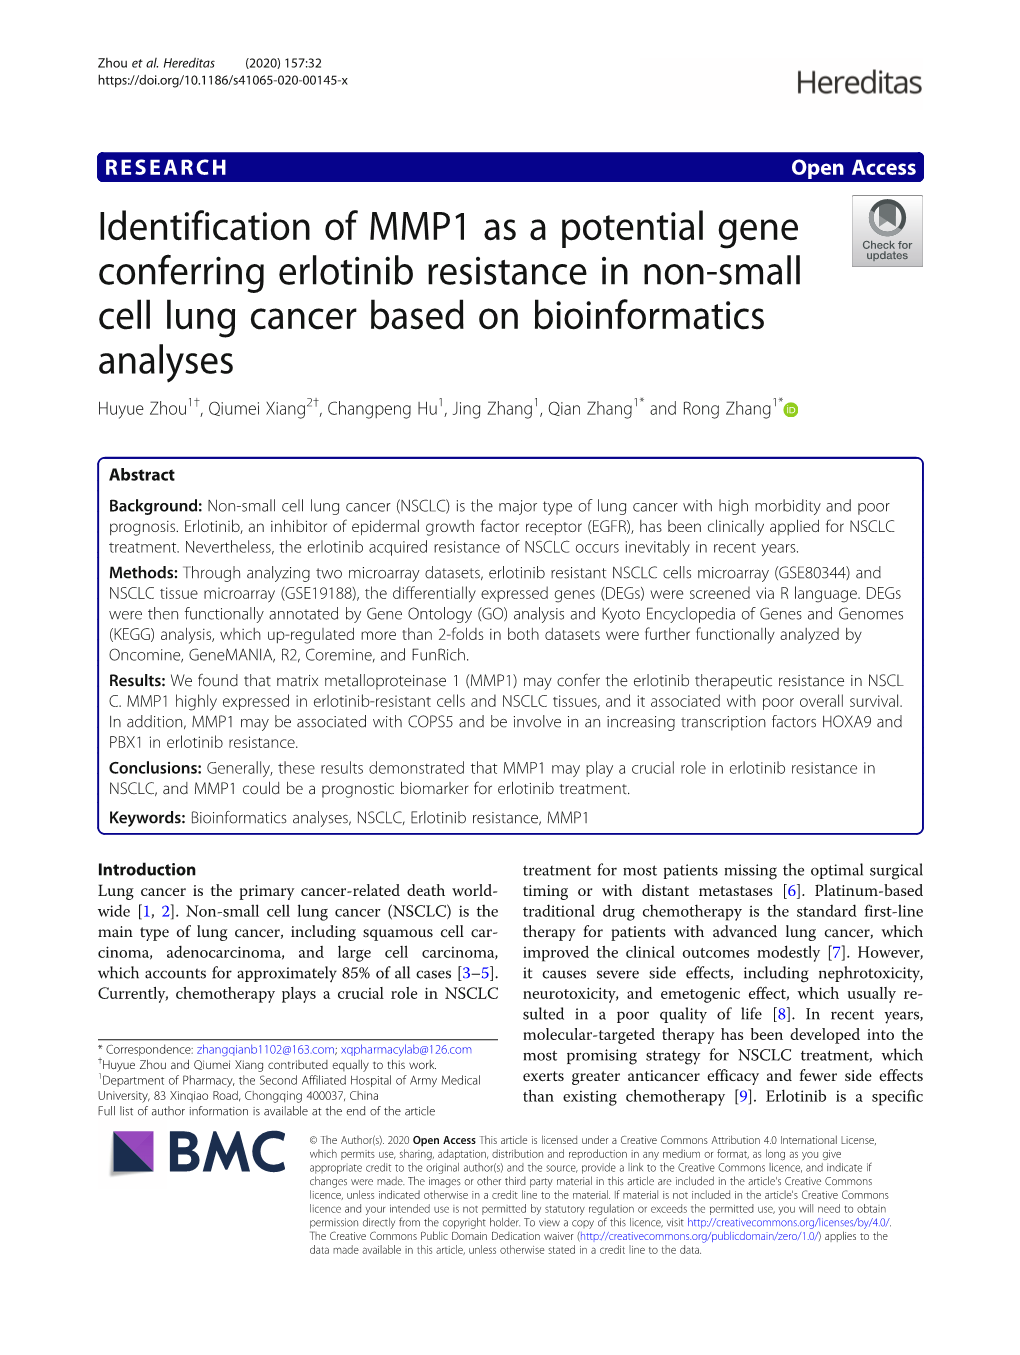 Identification of MMP1 As a Potential Gene Conferring Erlotinib Resistance